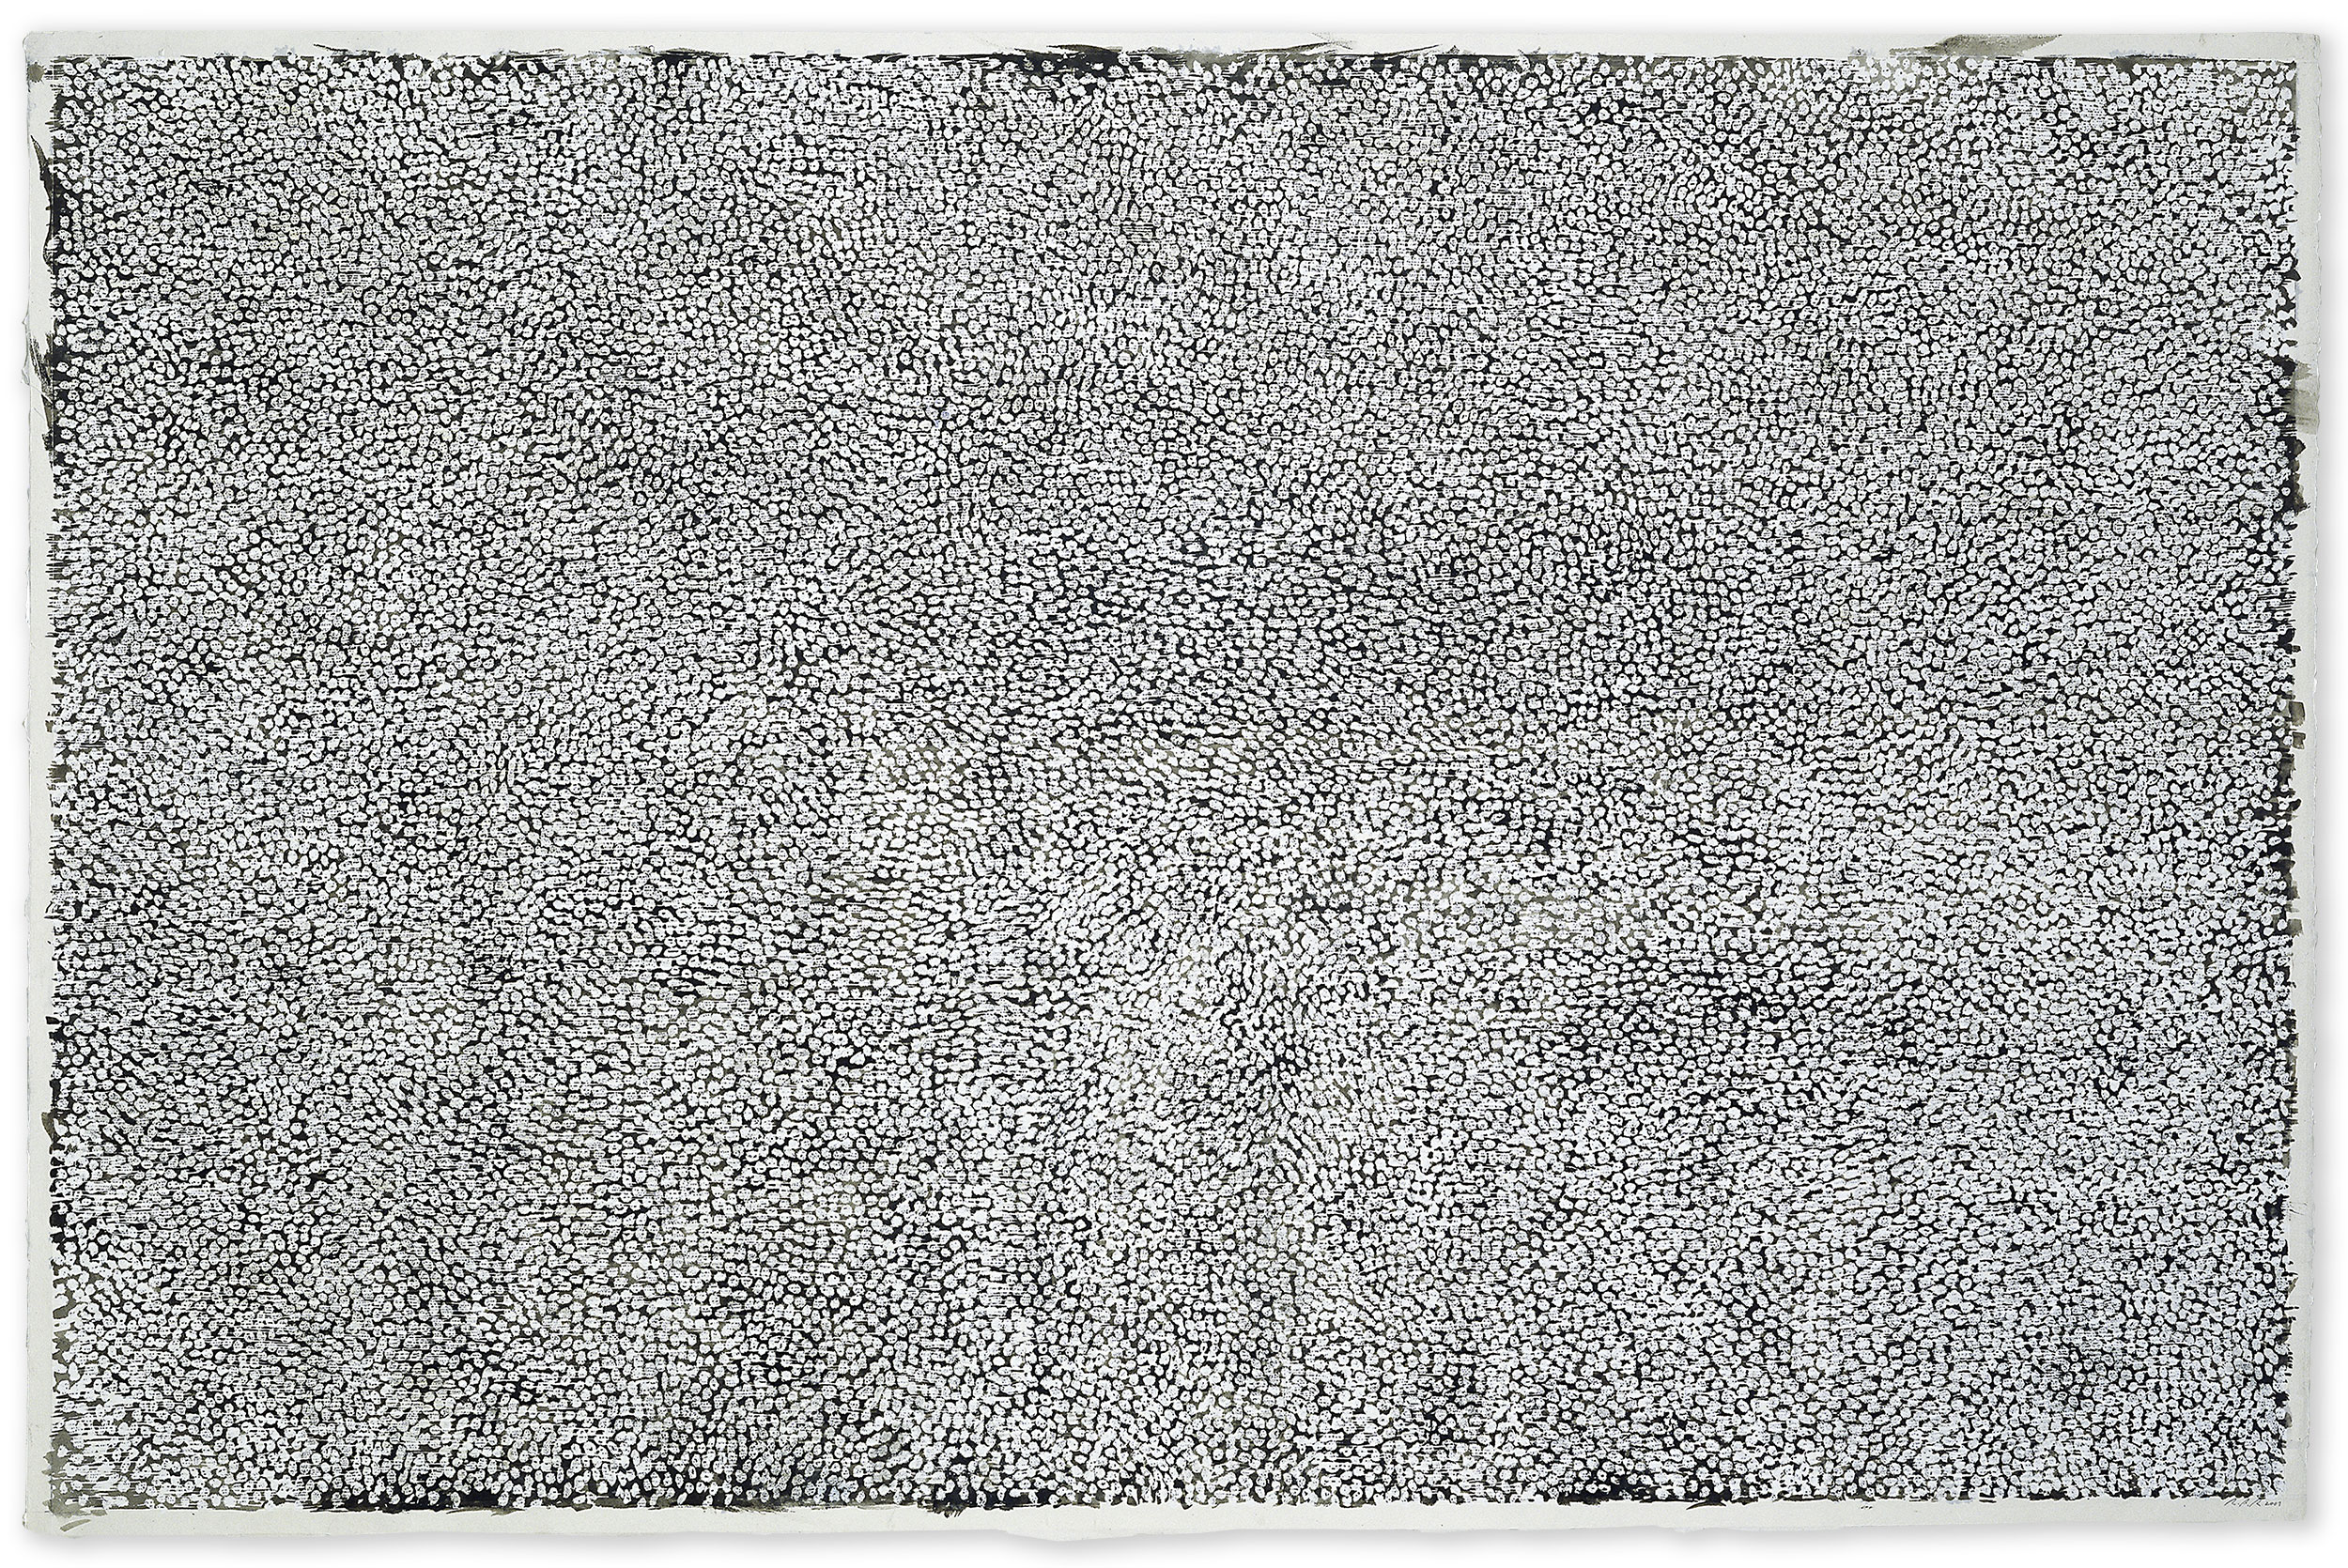 U II / 2002 · oil pastels, watercolor on paper · 82 x 132 cm